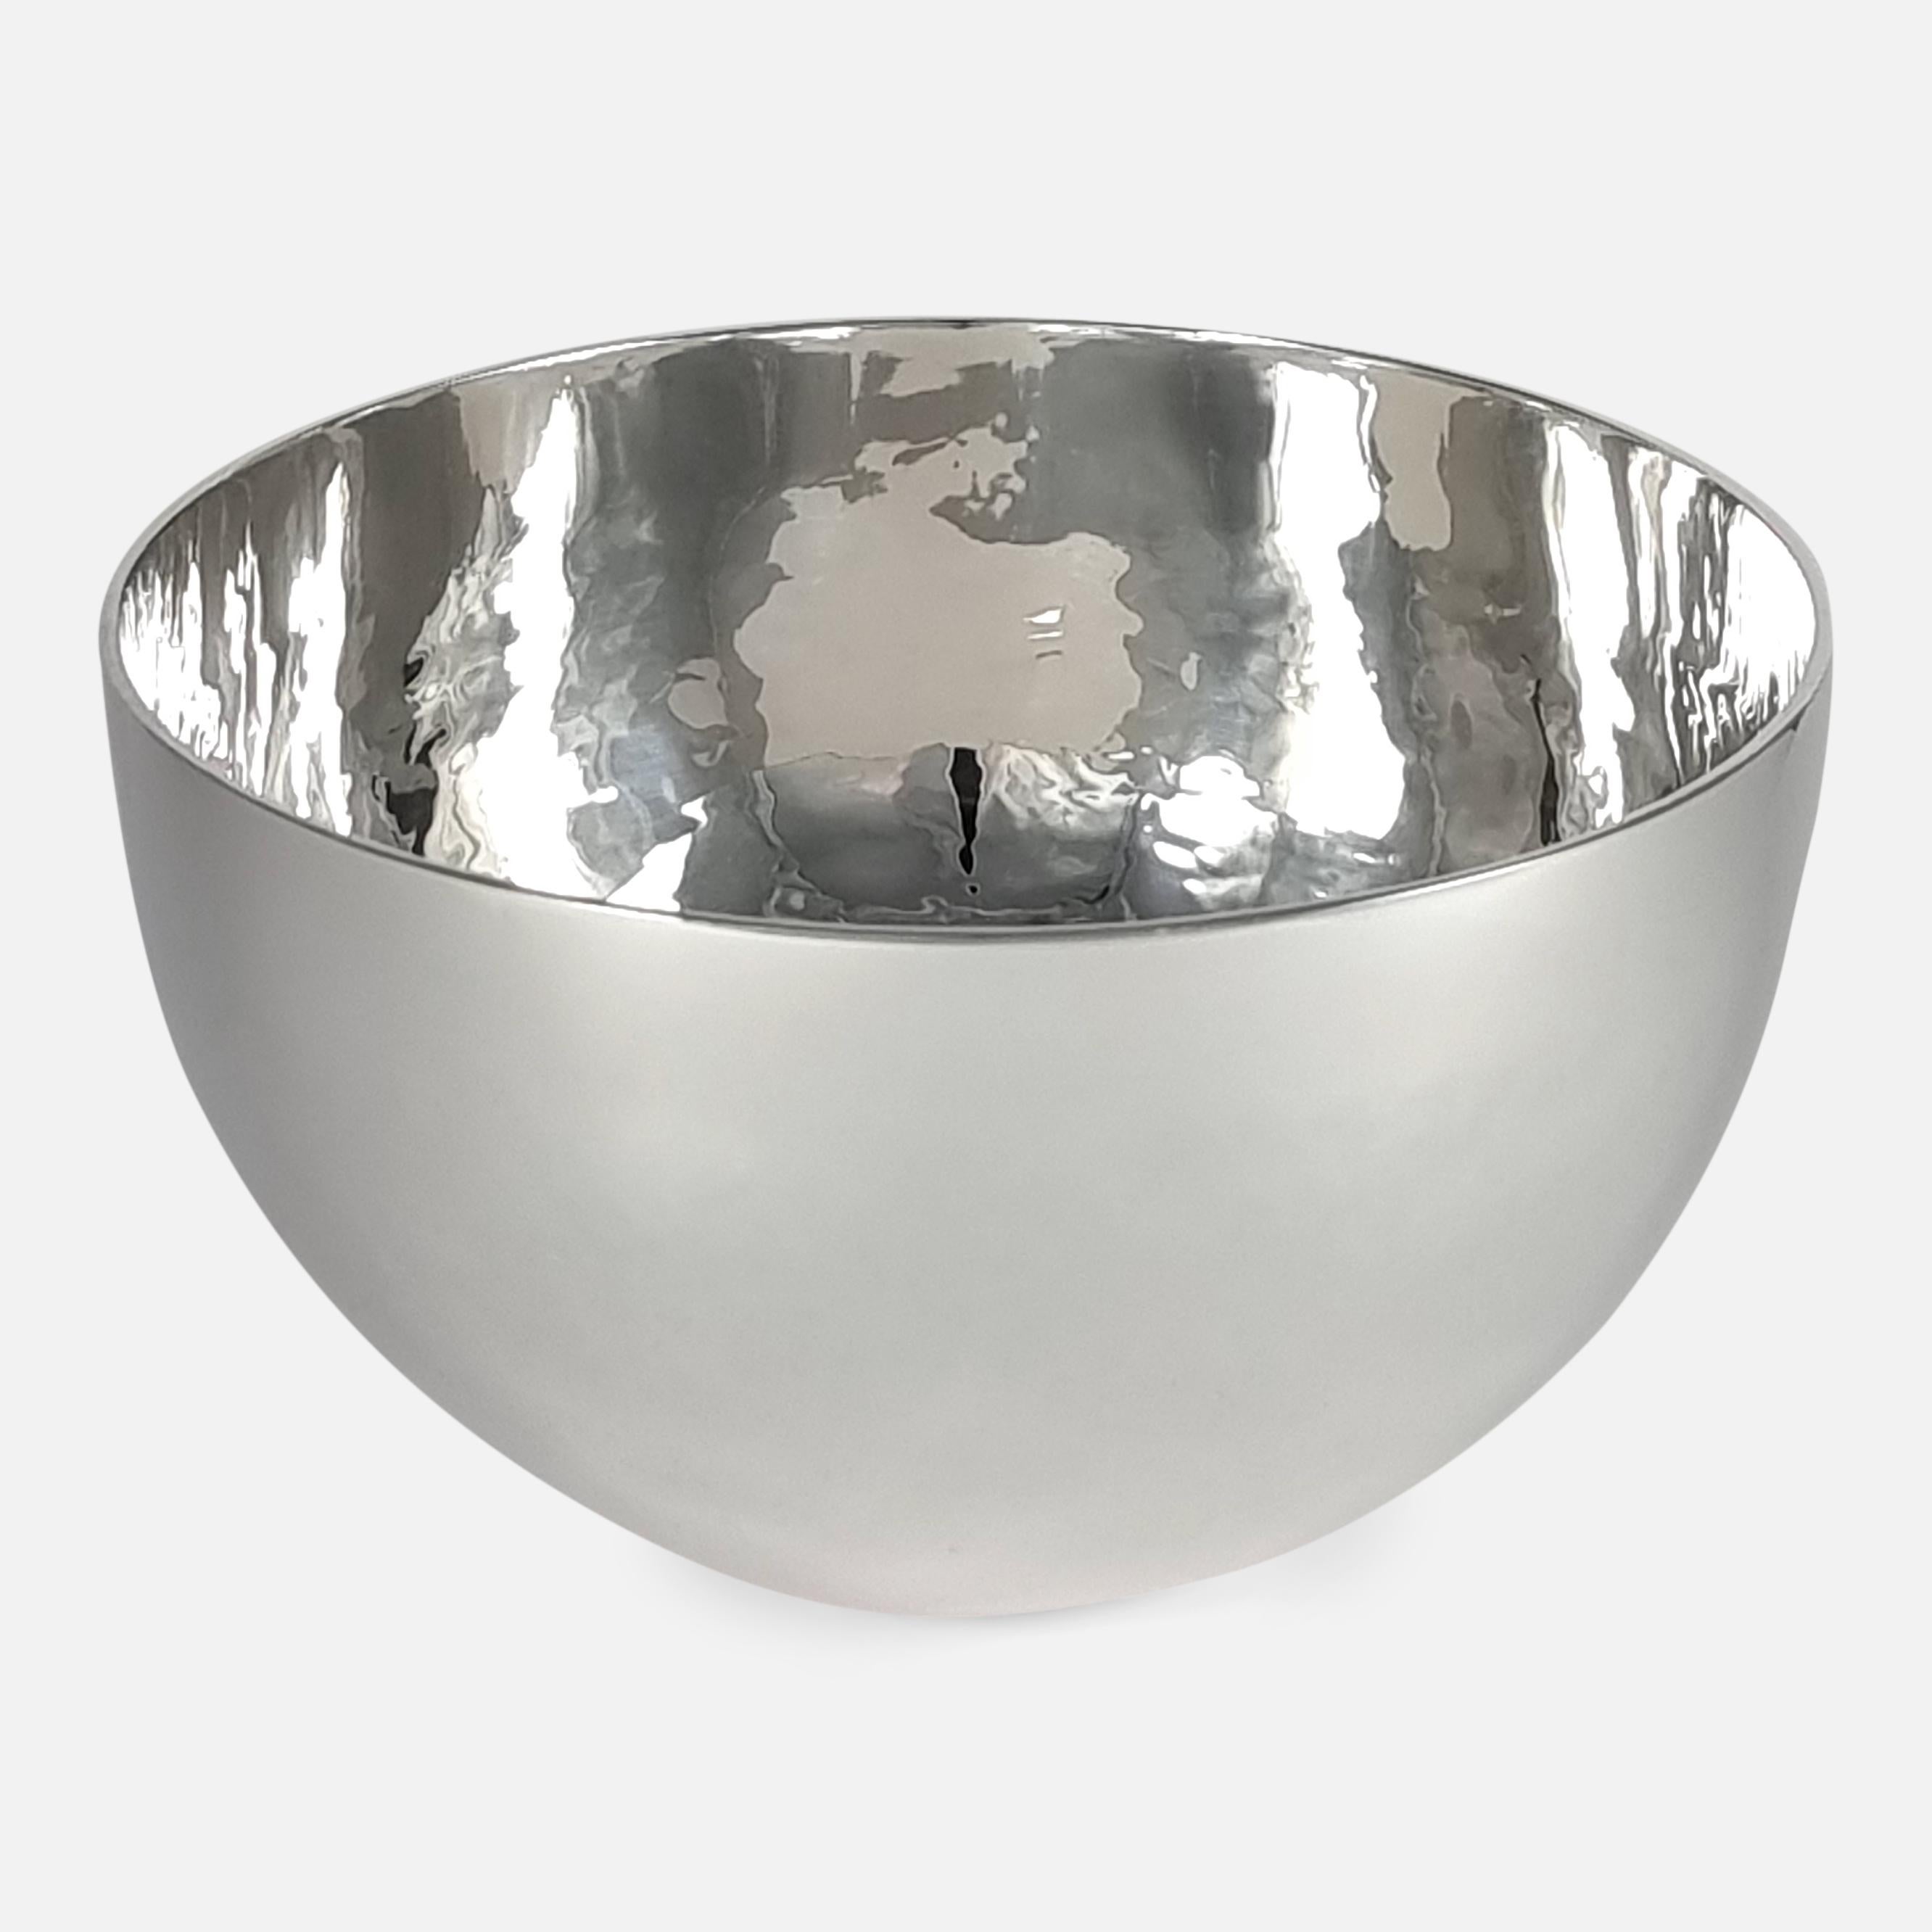 Hammered Elizabeth II Sterling Silver Tumble Fruit Bowl, William & Son, 2018 For Sale